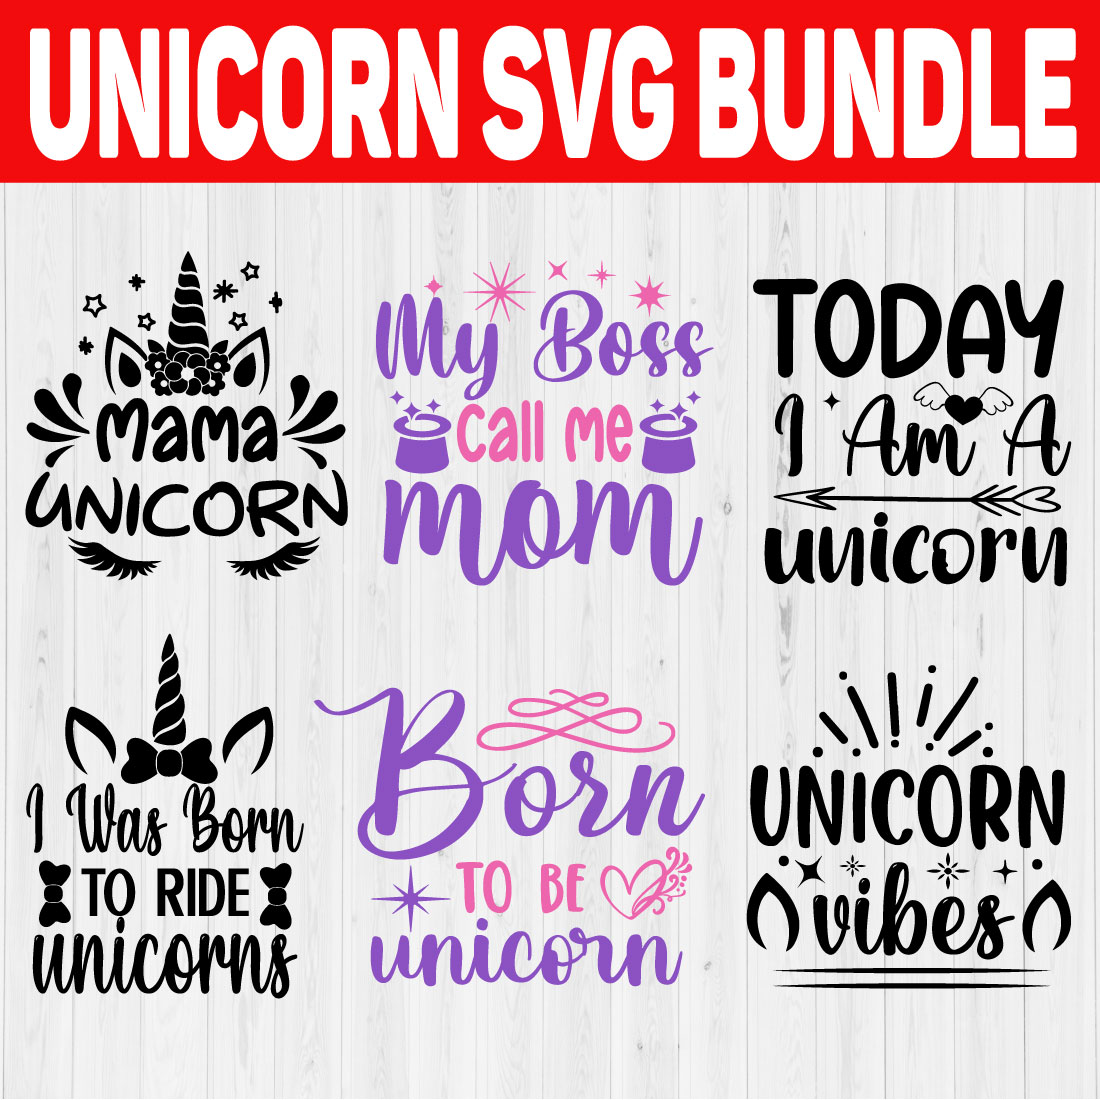 Funny Unicorn Svg Bundle Vol7 cover image.